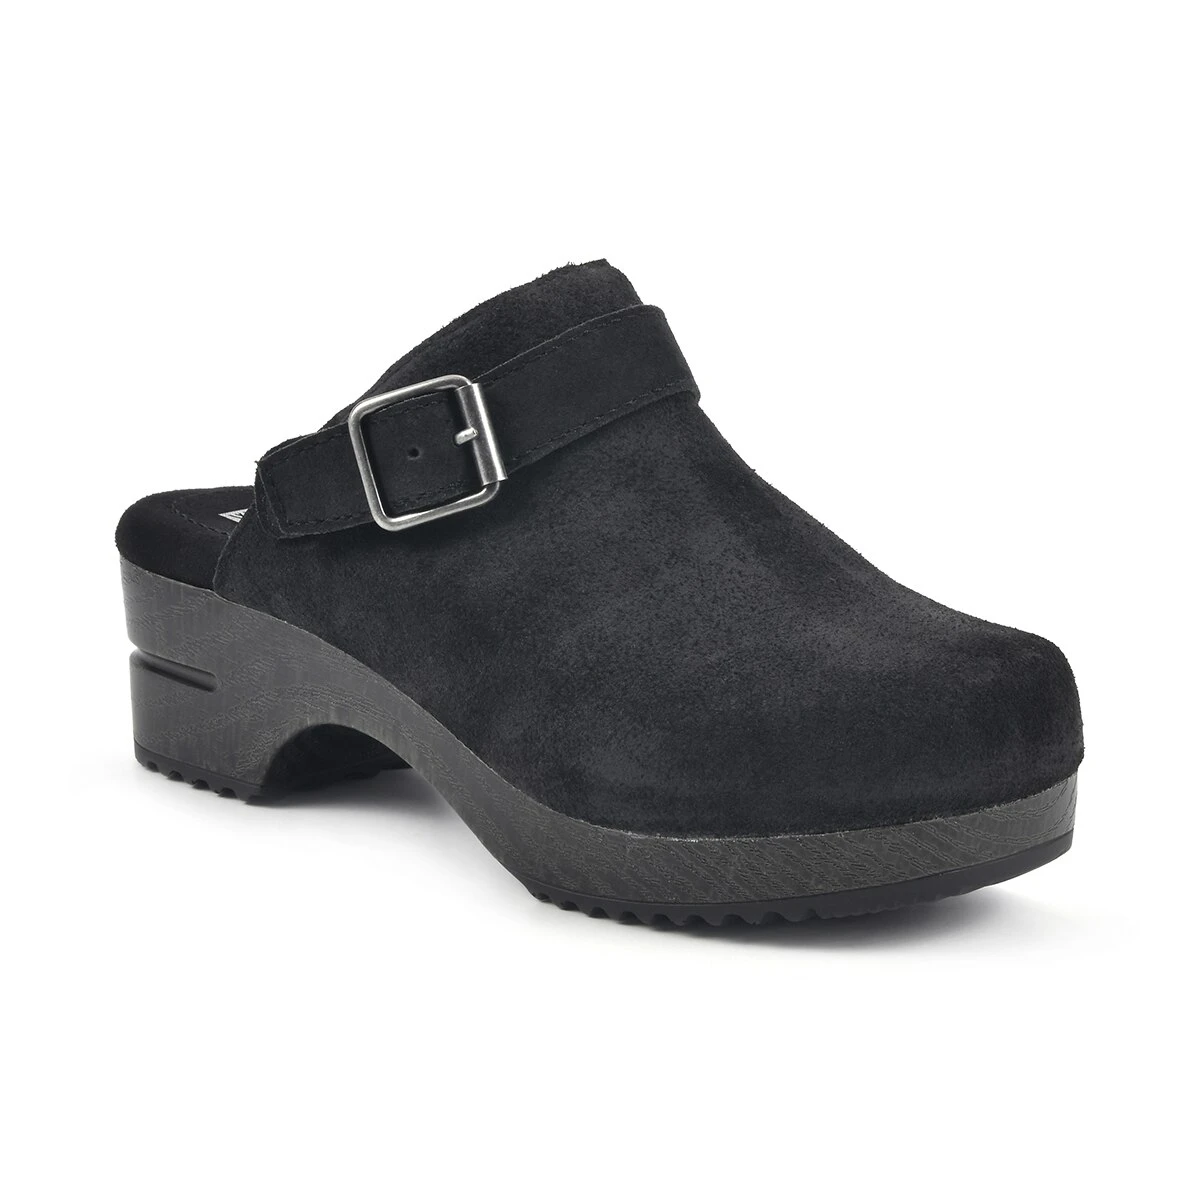 Shop Premium Men's and Women's Footwear - Stylish Boots, Slippers, Wellingtons | usawatchx.com